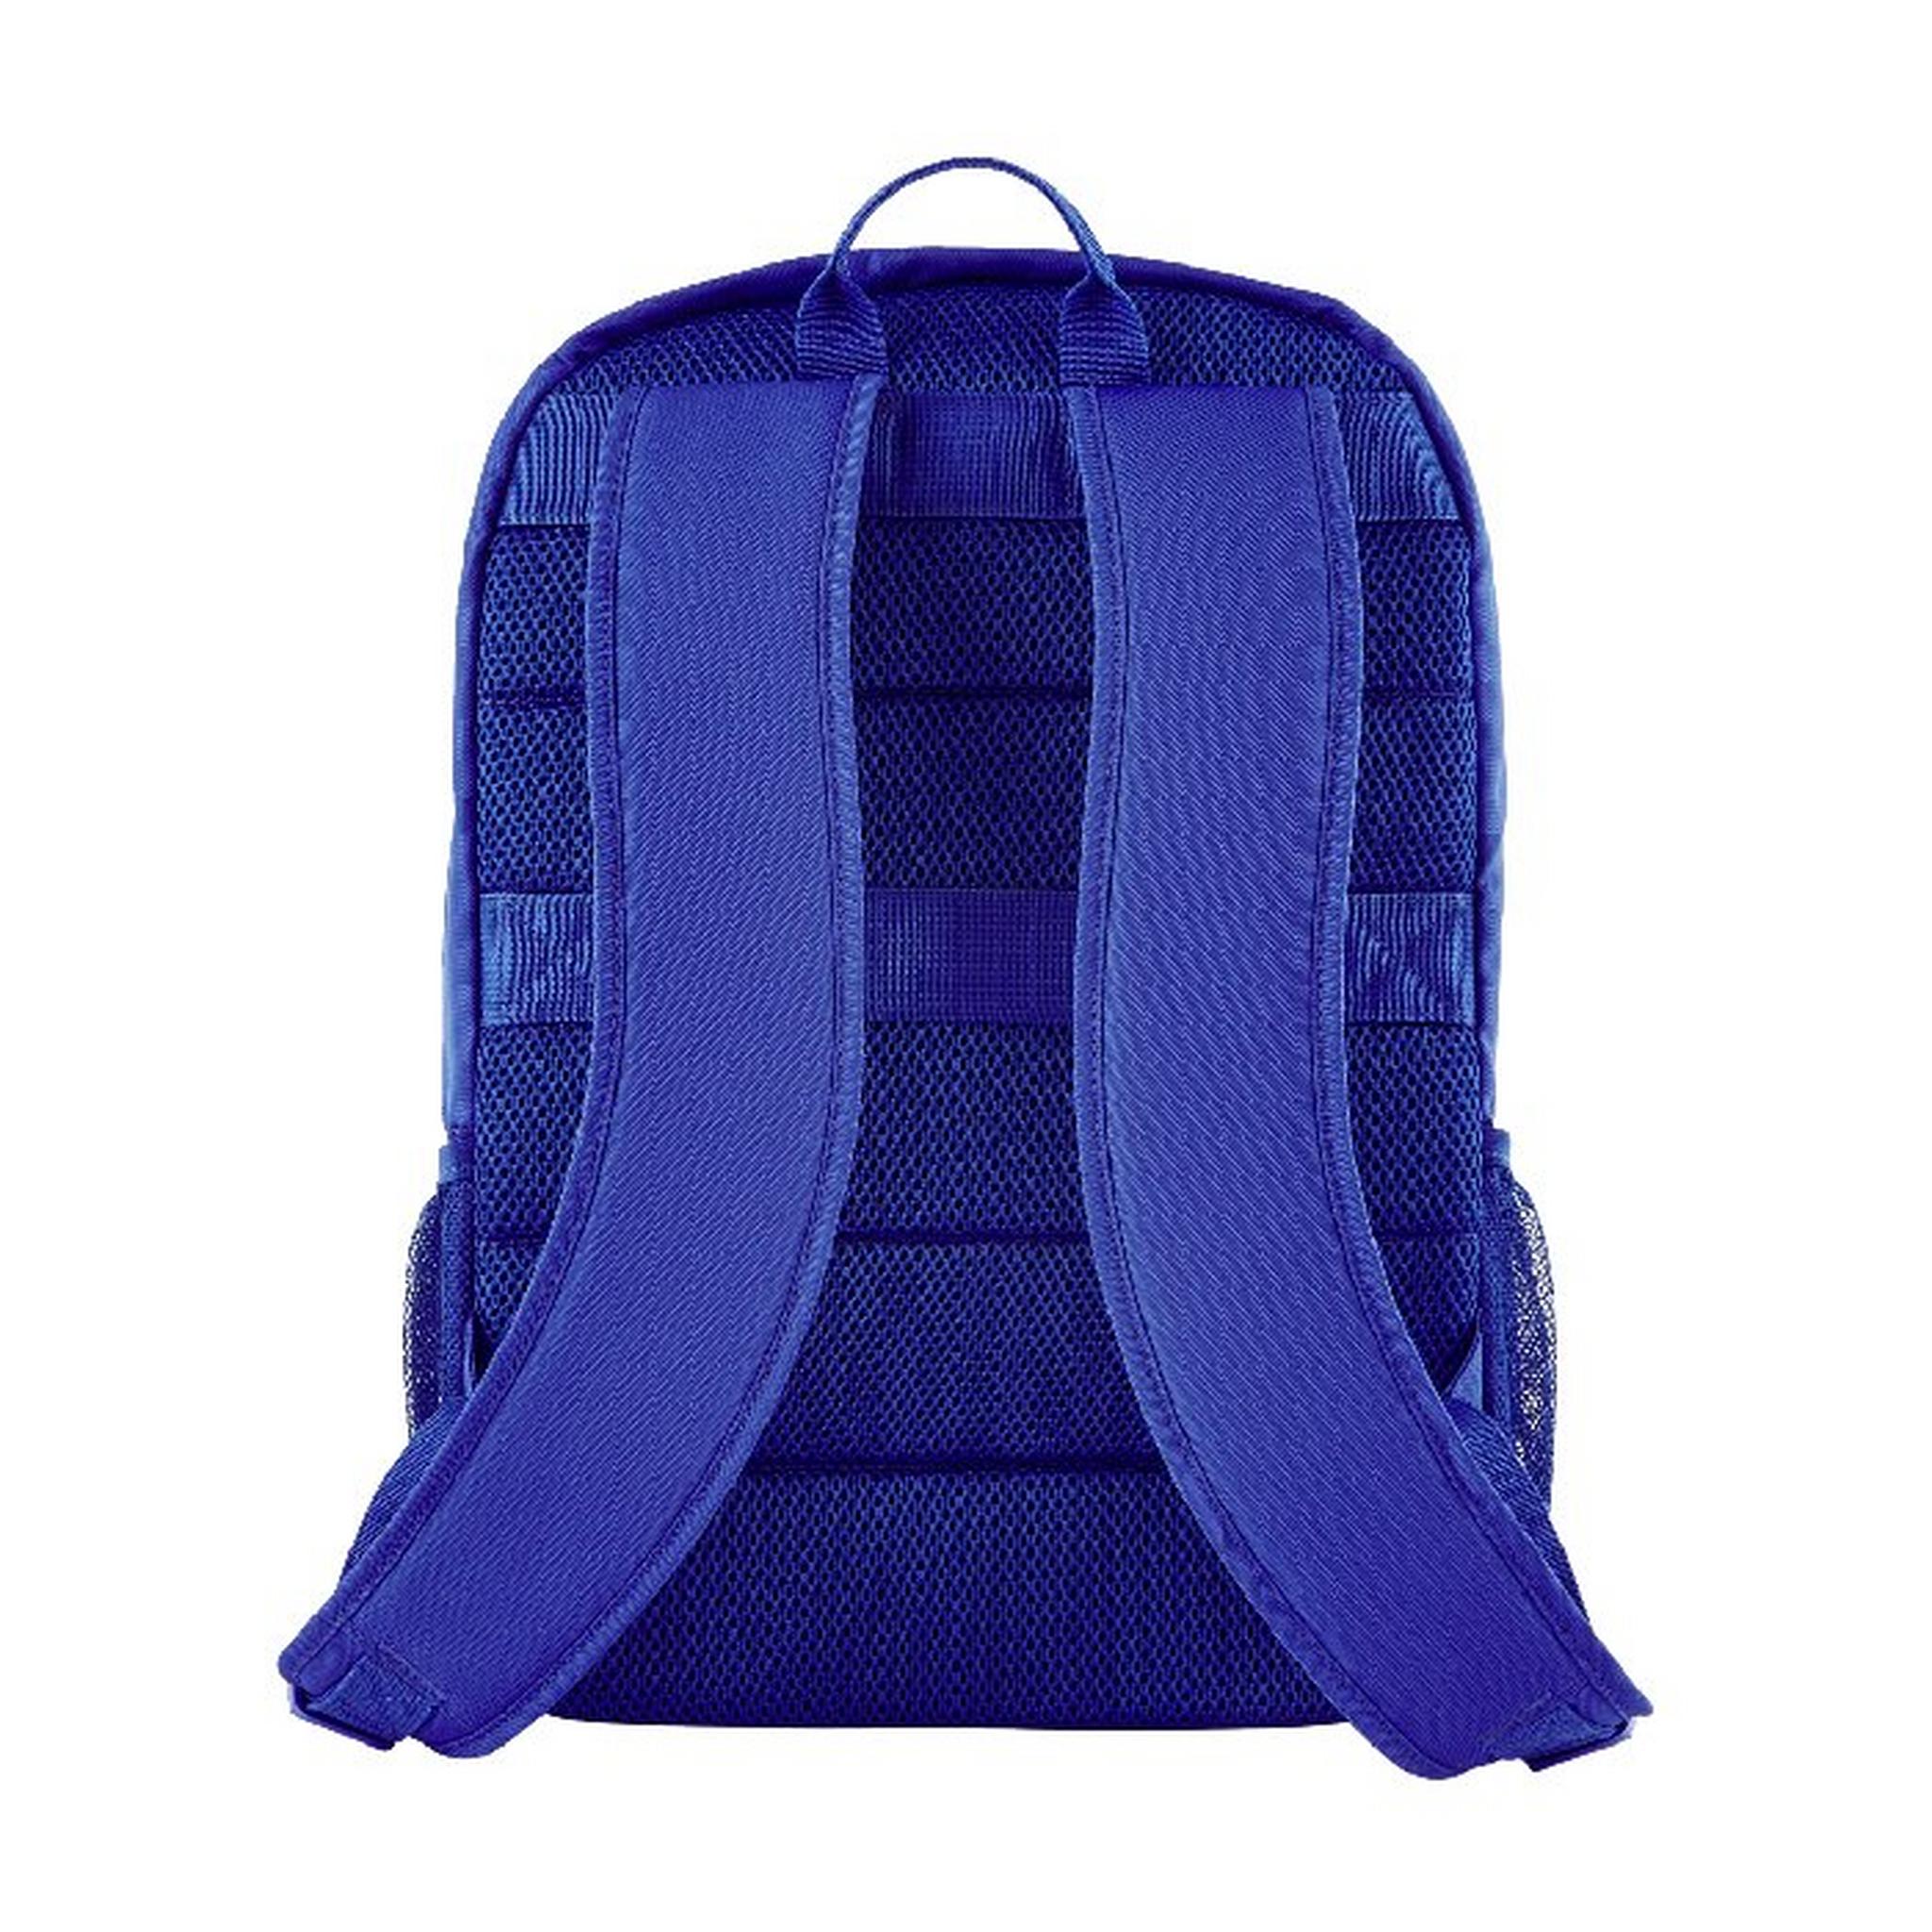 HEWLETT PACKARD Campus 15.6 inch Laptop Backpack, , 7J596AA – Blue & Yellow